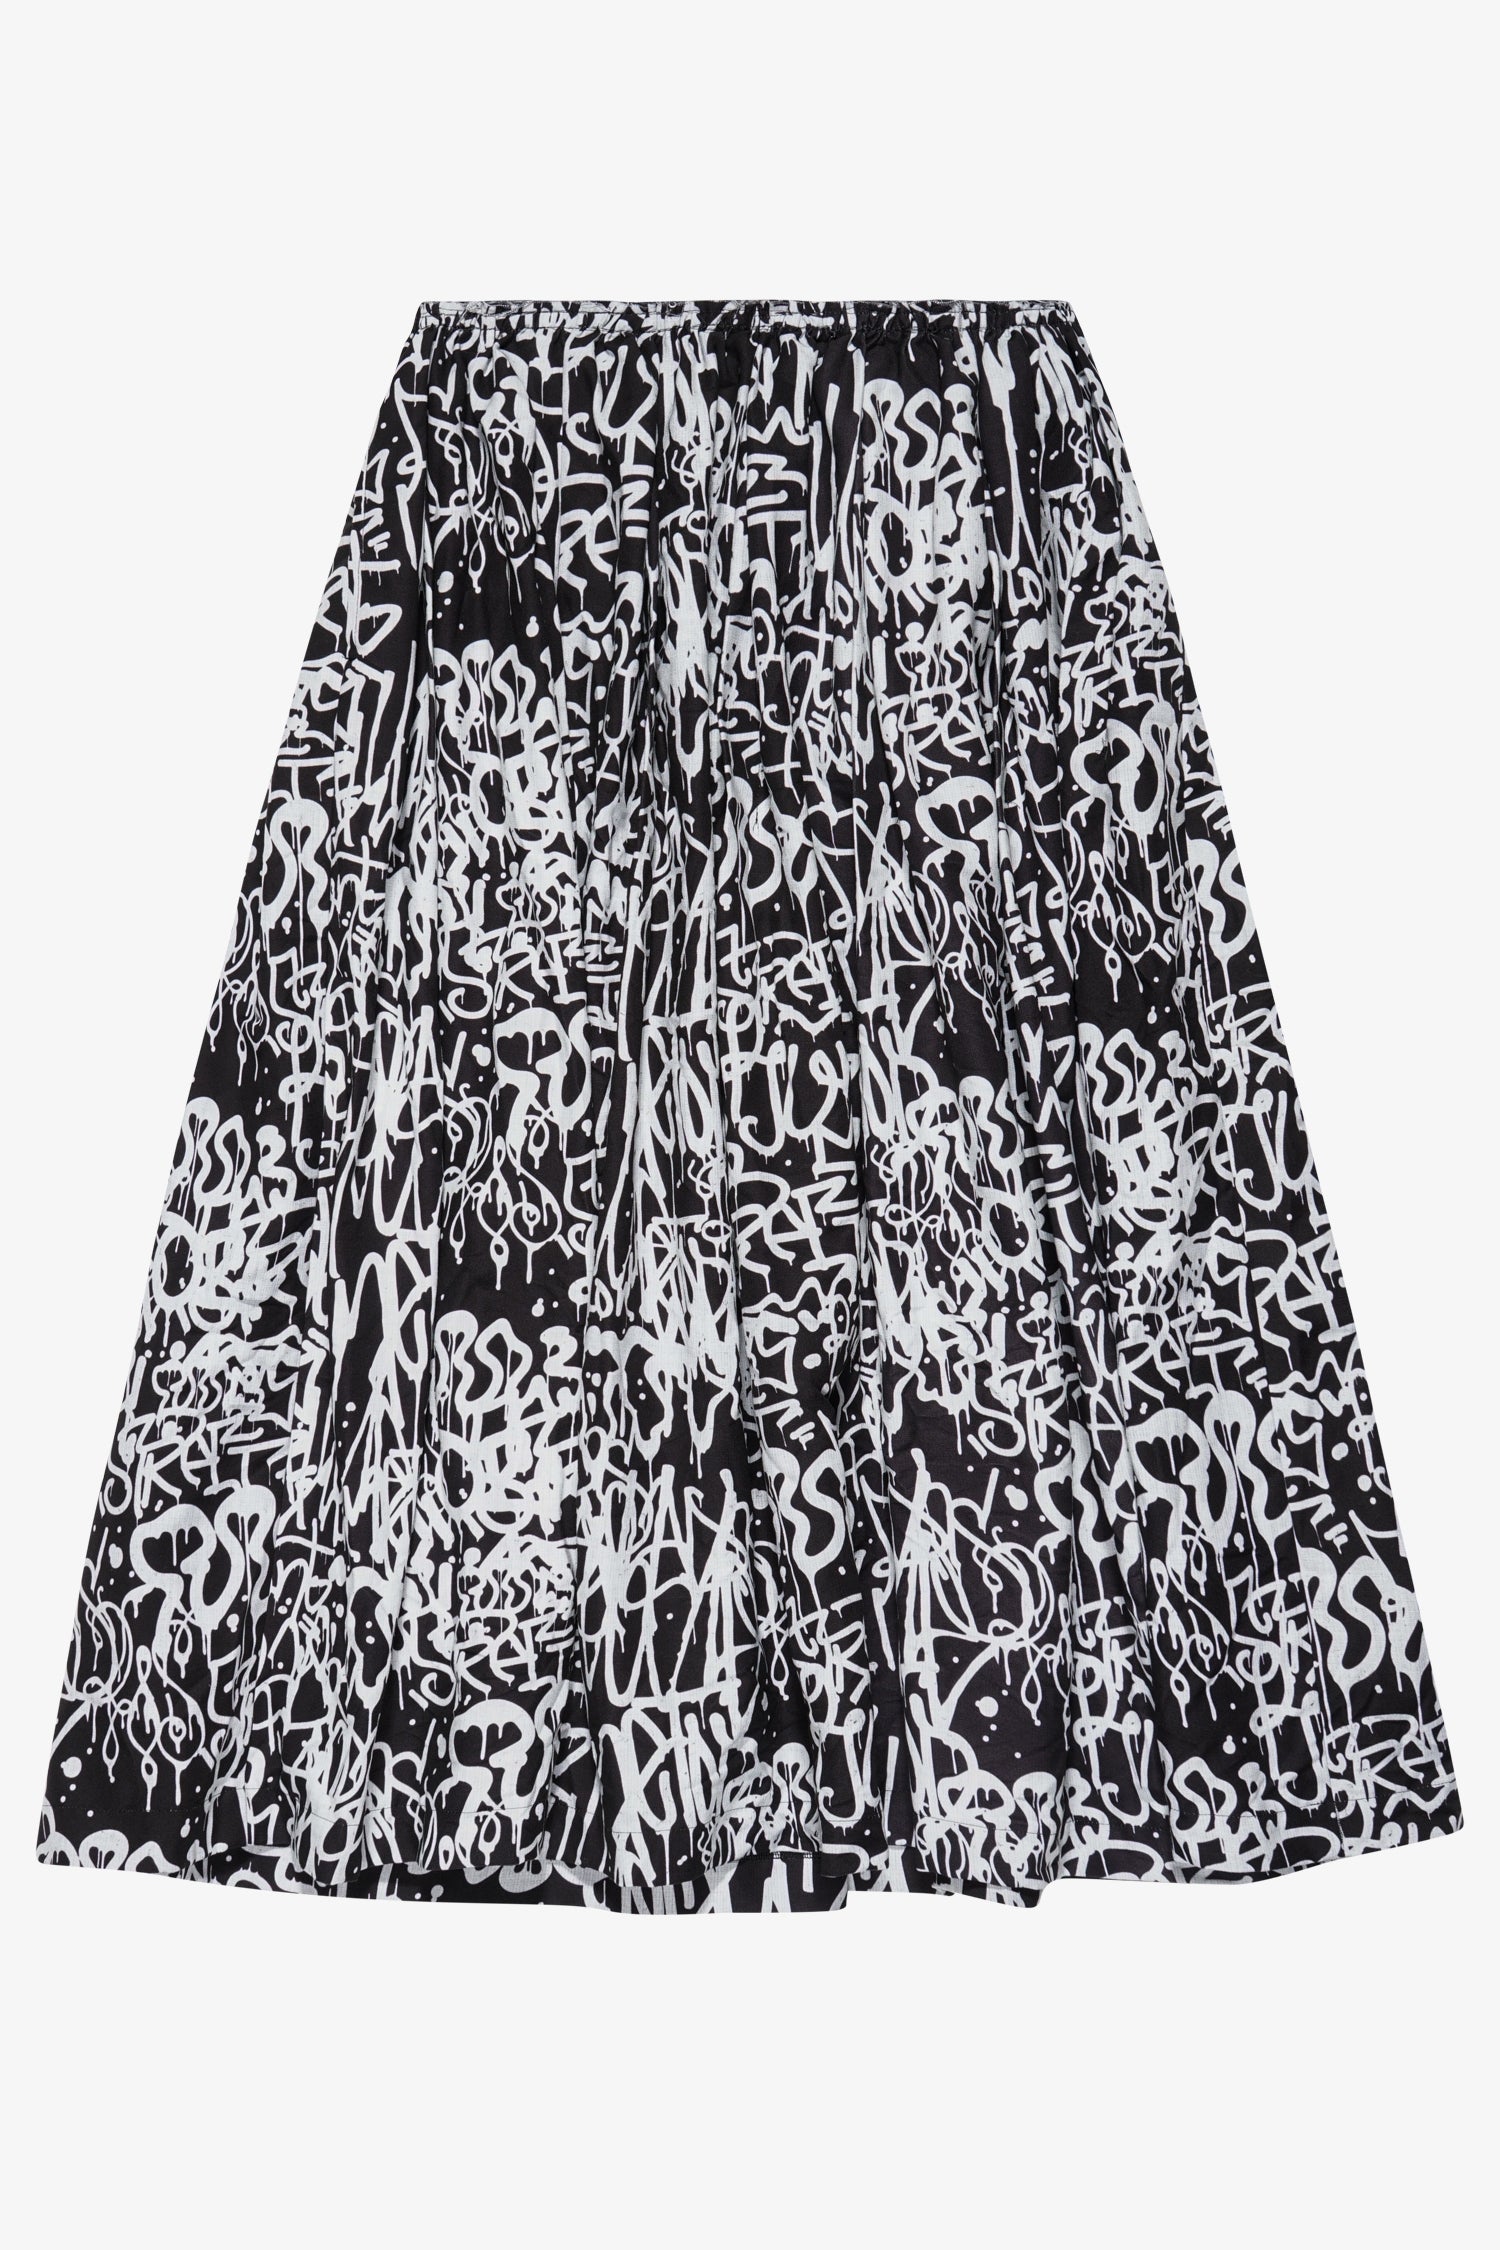 Selectshop FRAME - COMME DES GARCONS BLACK Graffiti Print High Waist Skirt Bottoms Dubai